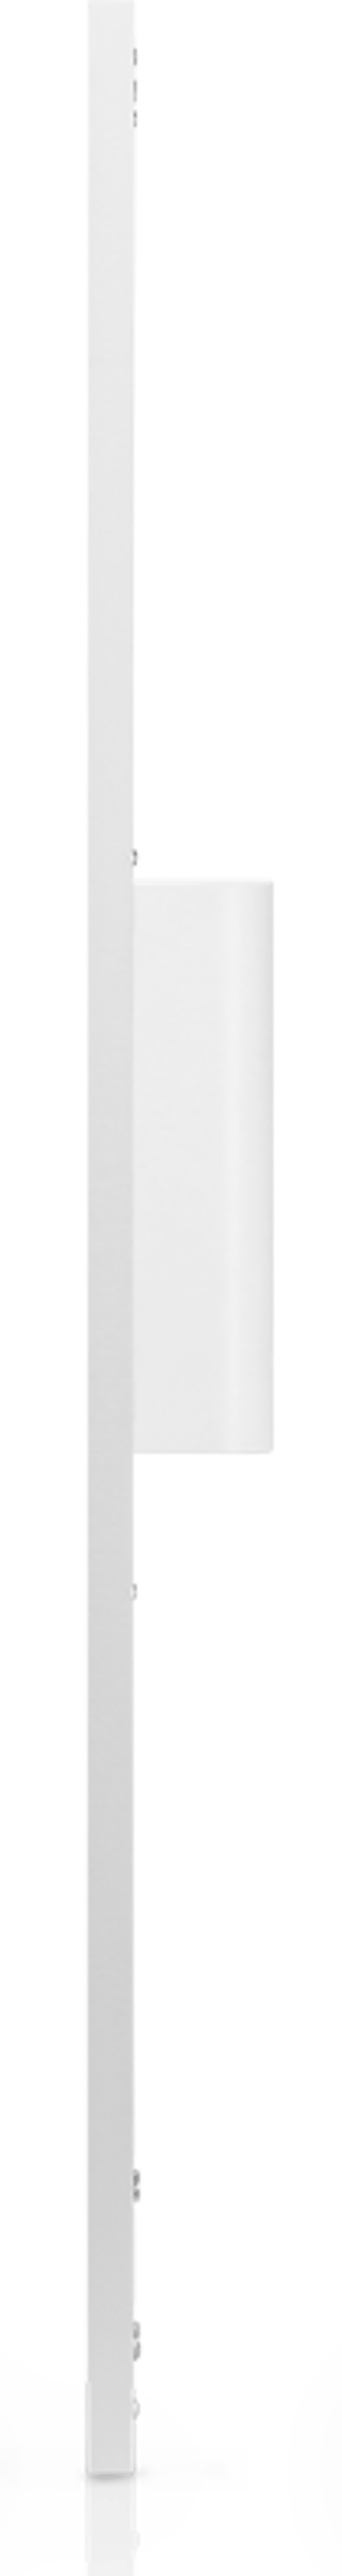 Ubiquiti Unifi LED Panel PoE 2-pack